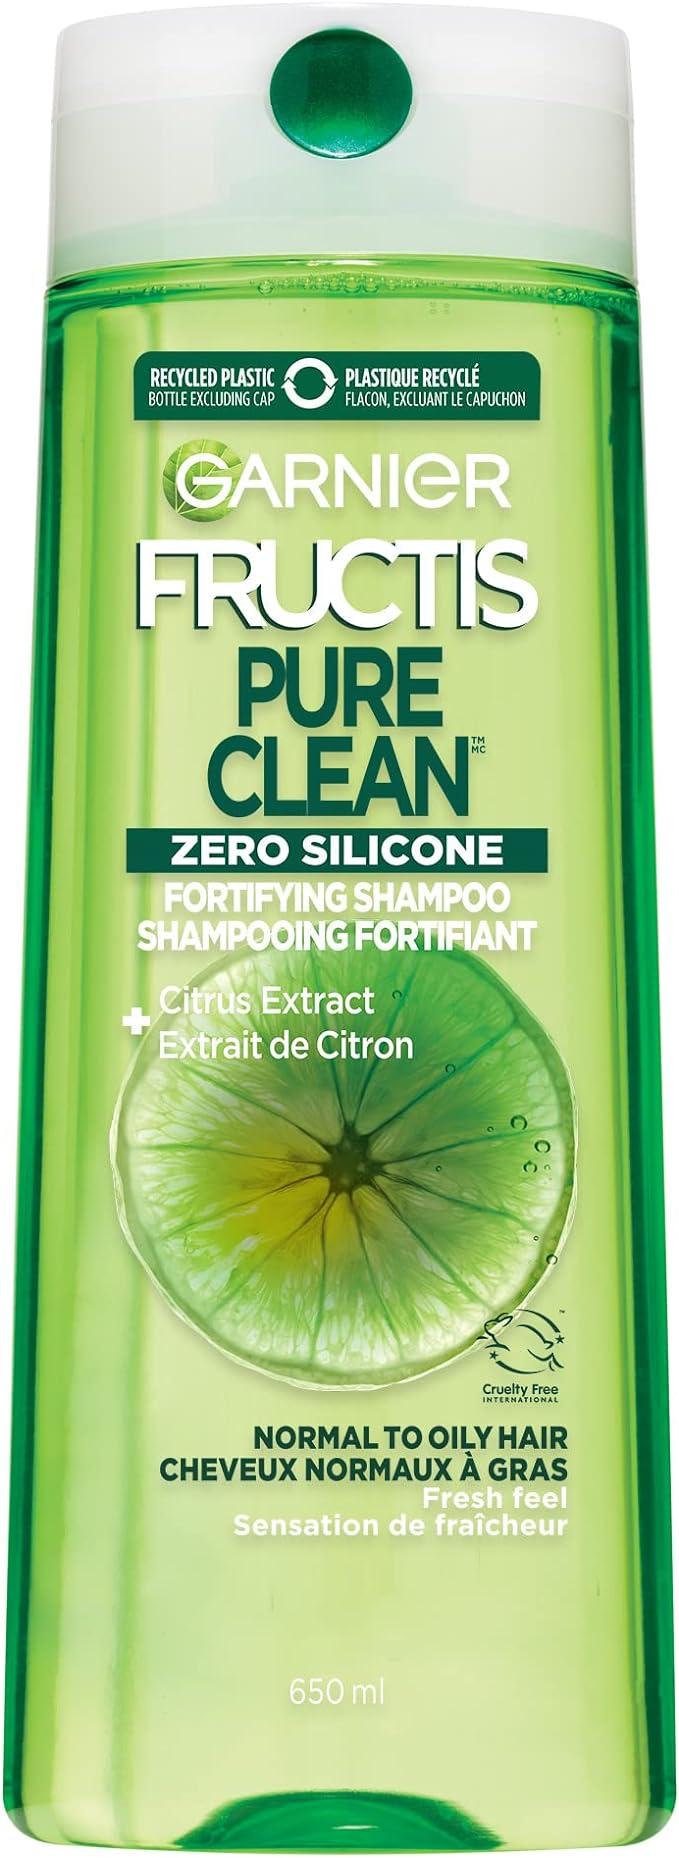 garnier fructis pure clean zero silicone fortifying shampoo 650ml  garnier ?b09m594546